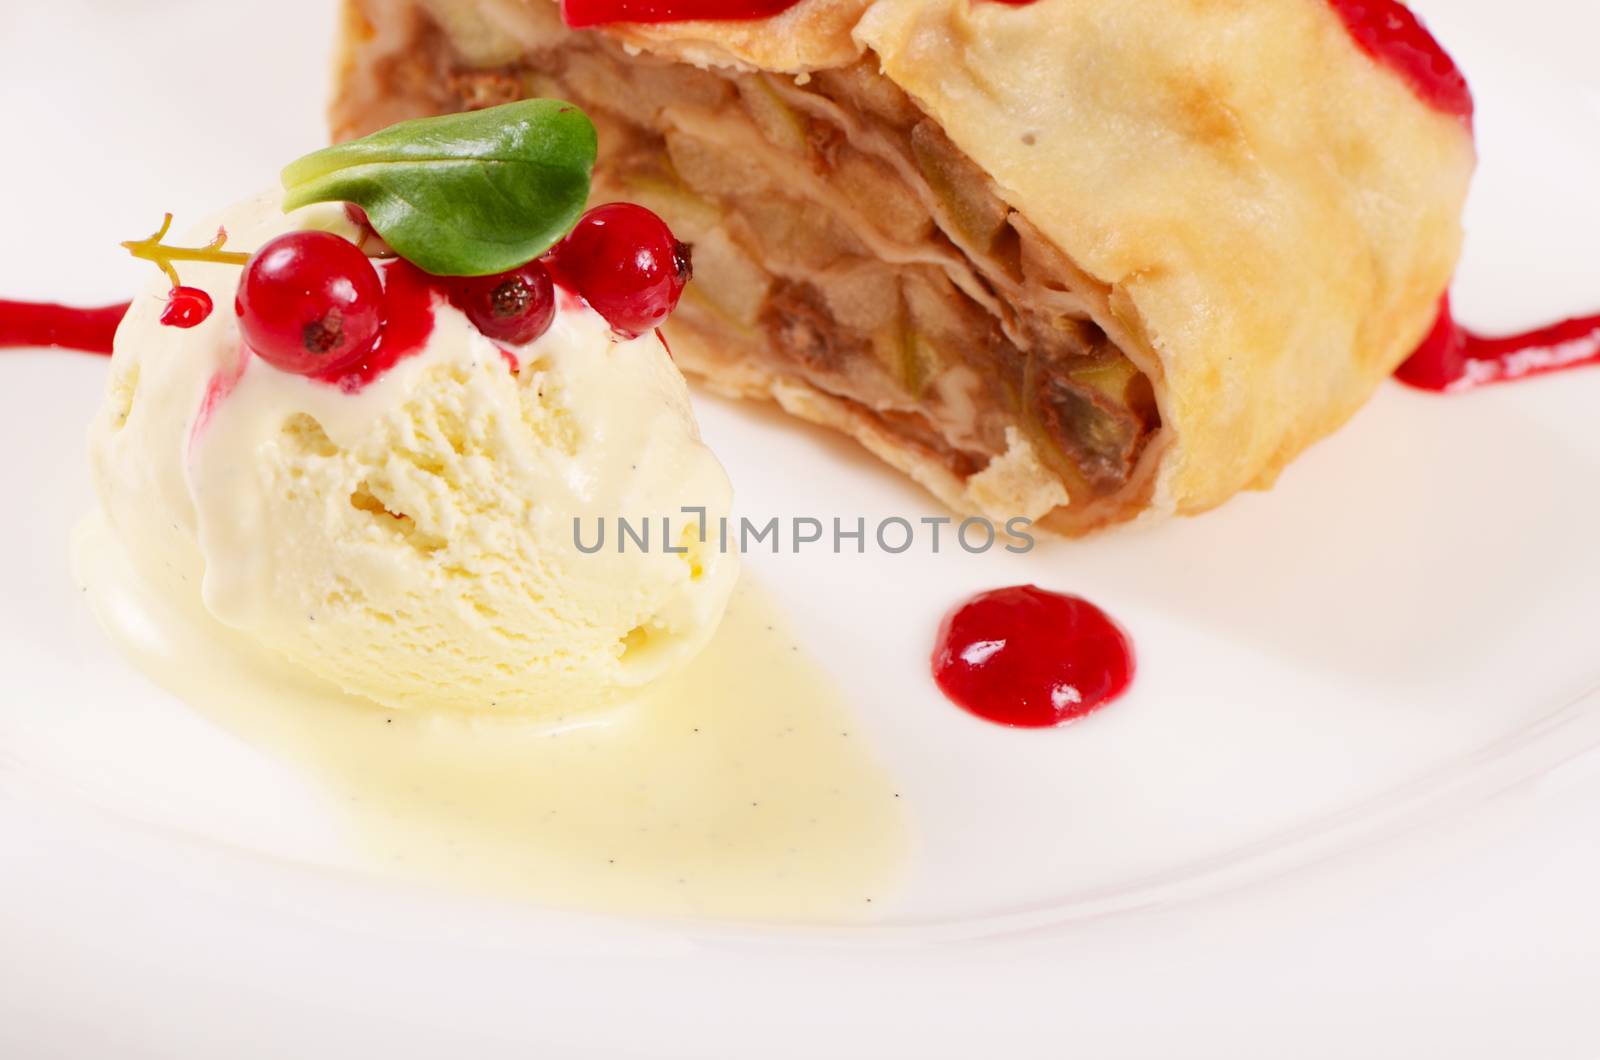 The vanilla ice cream with Apple strudel by SvetaVo